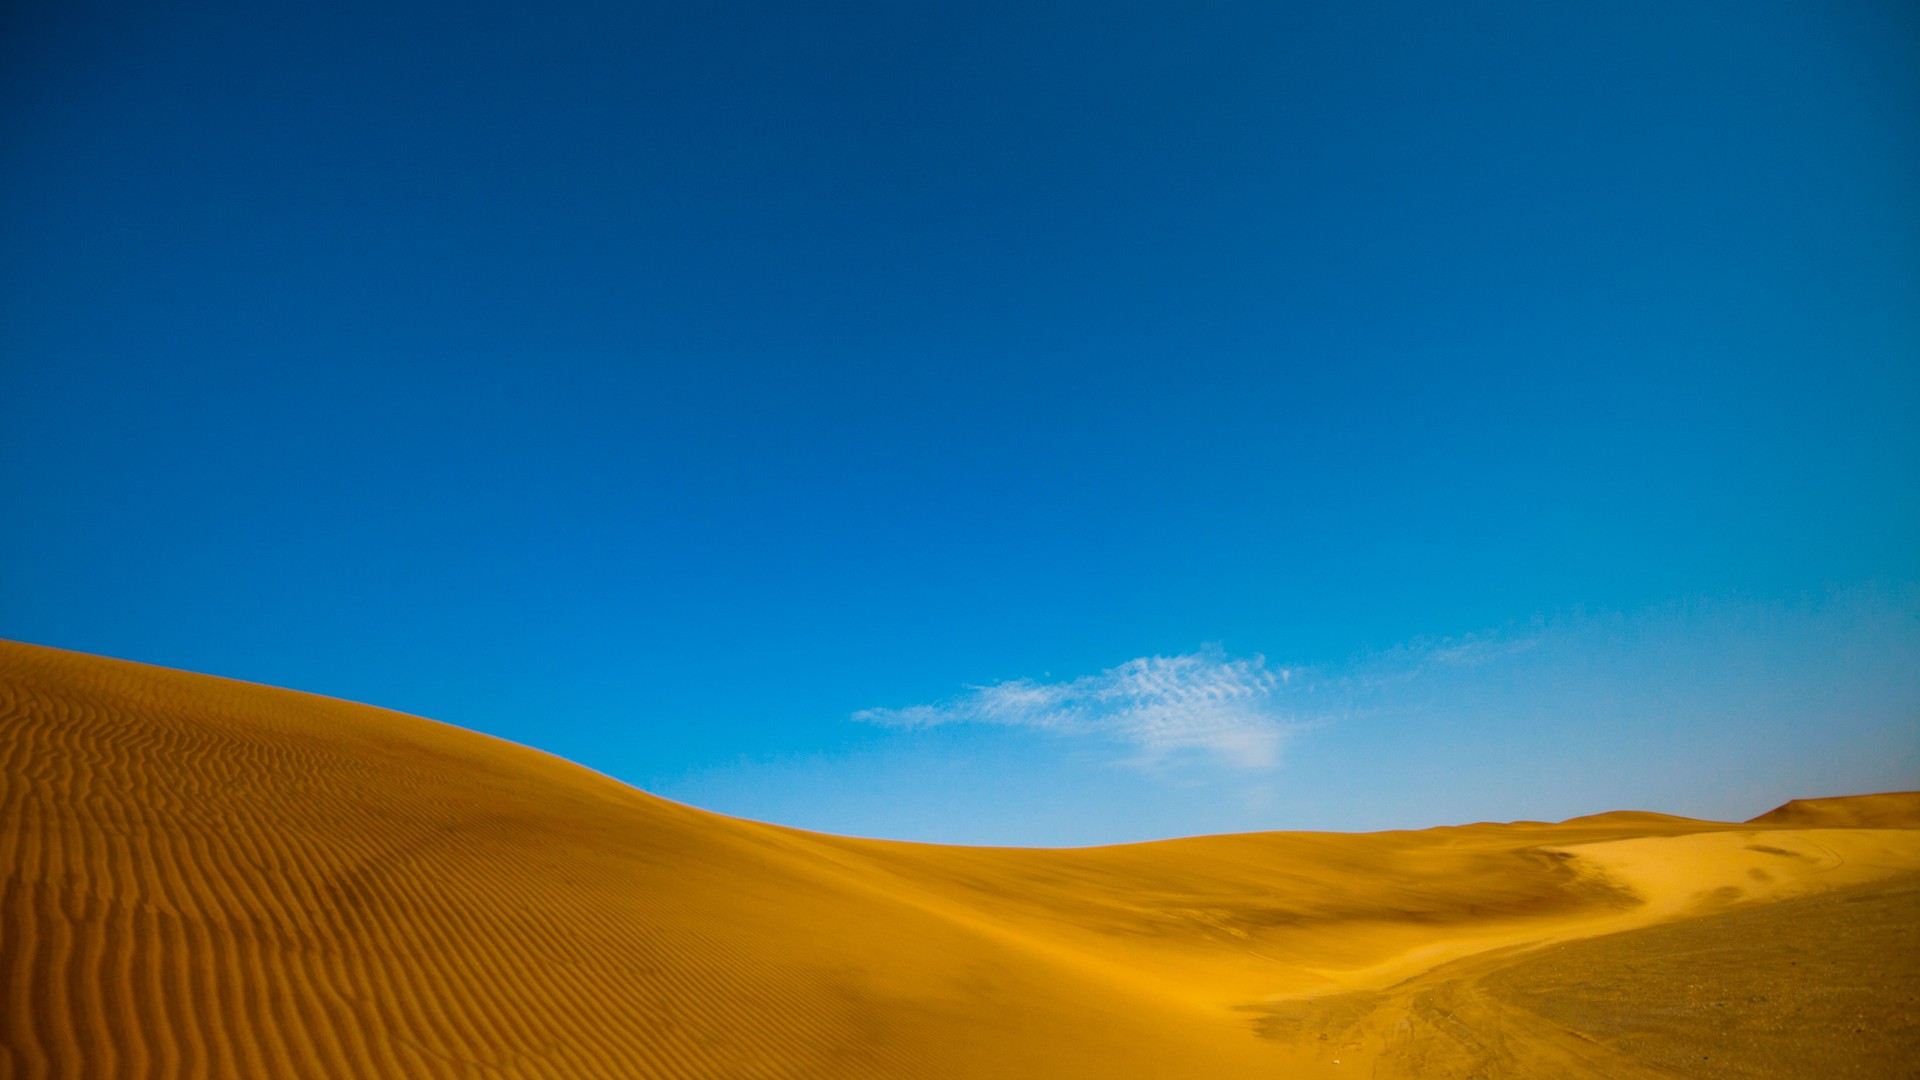 General 1920x1080 nature landscape desert sand sky dunes